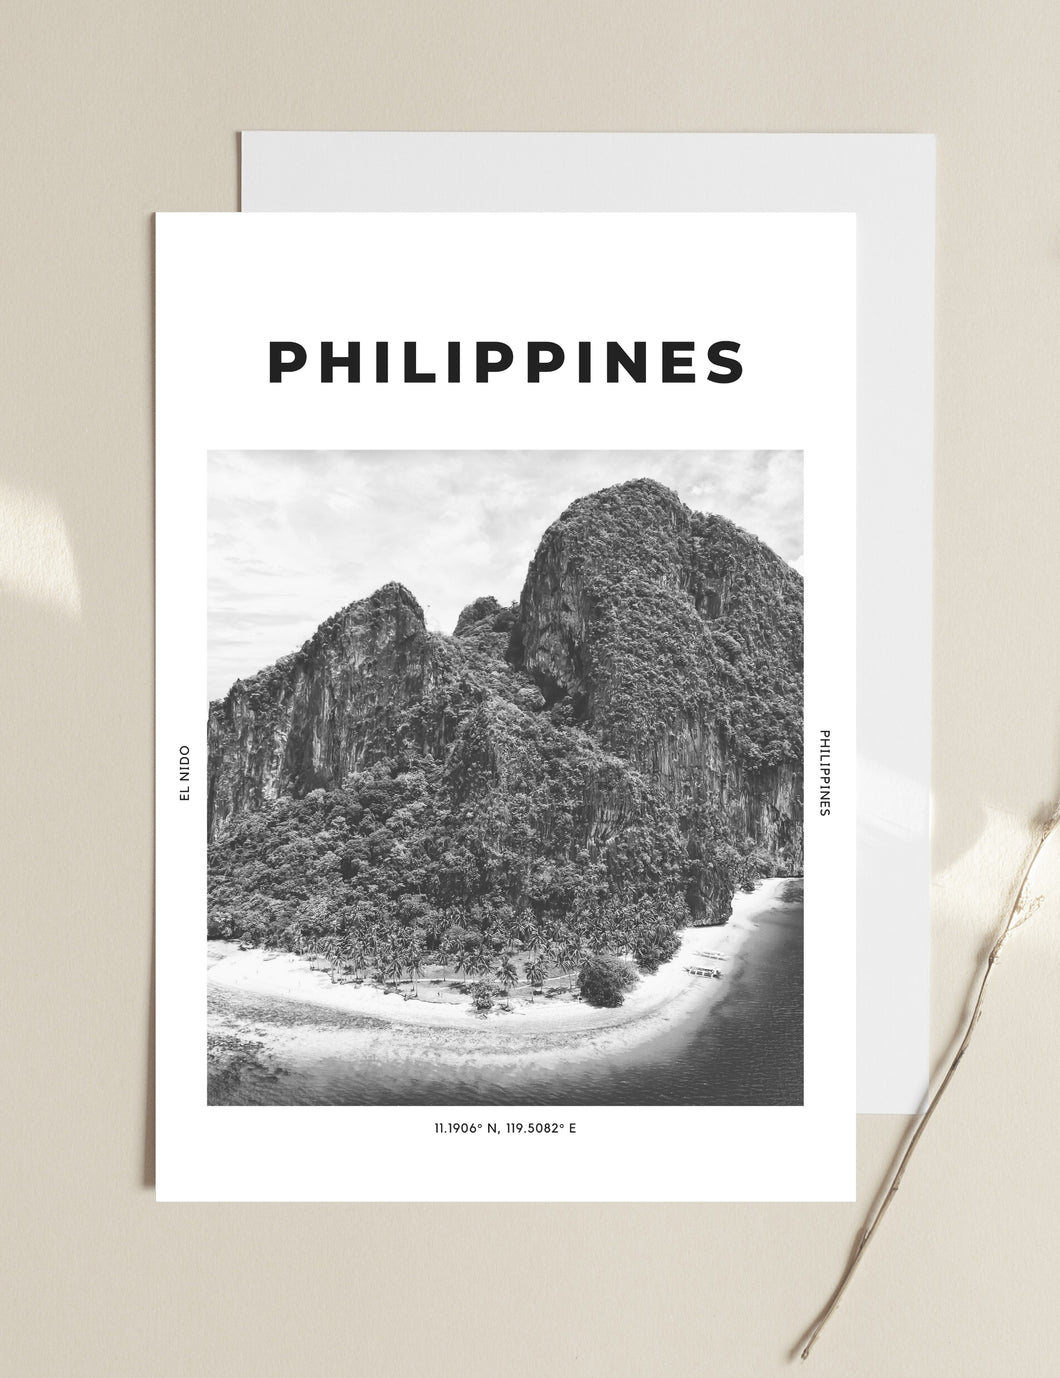 Philippines 'Heaven On Earth' Print